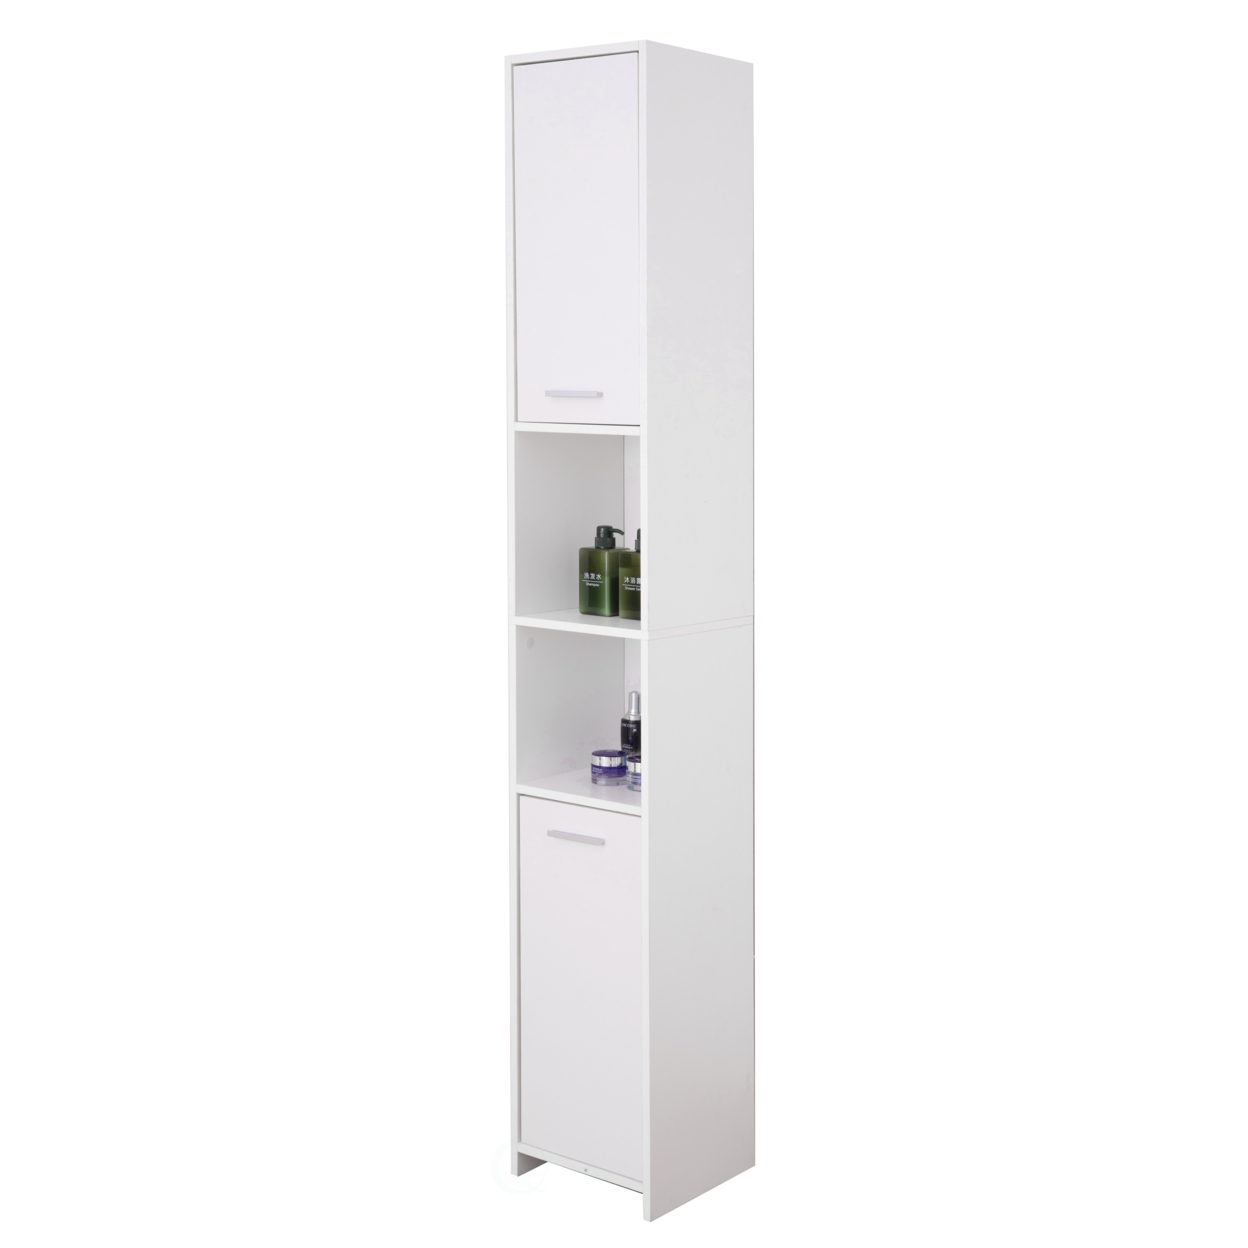 Modern White Standing Bathroom Tall Linen Tower Storage Cabinet - Narrow